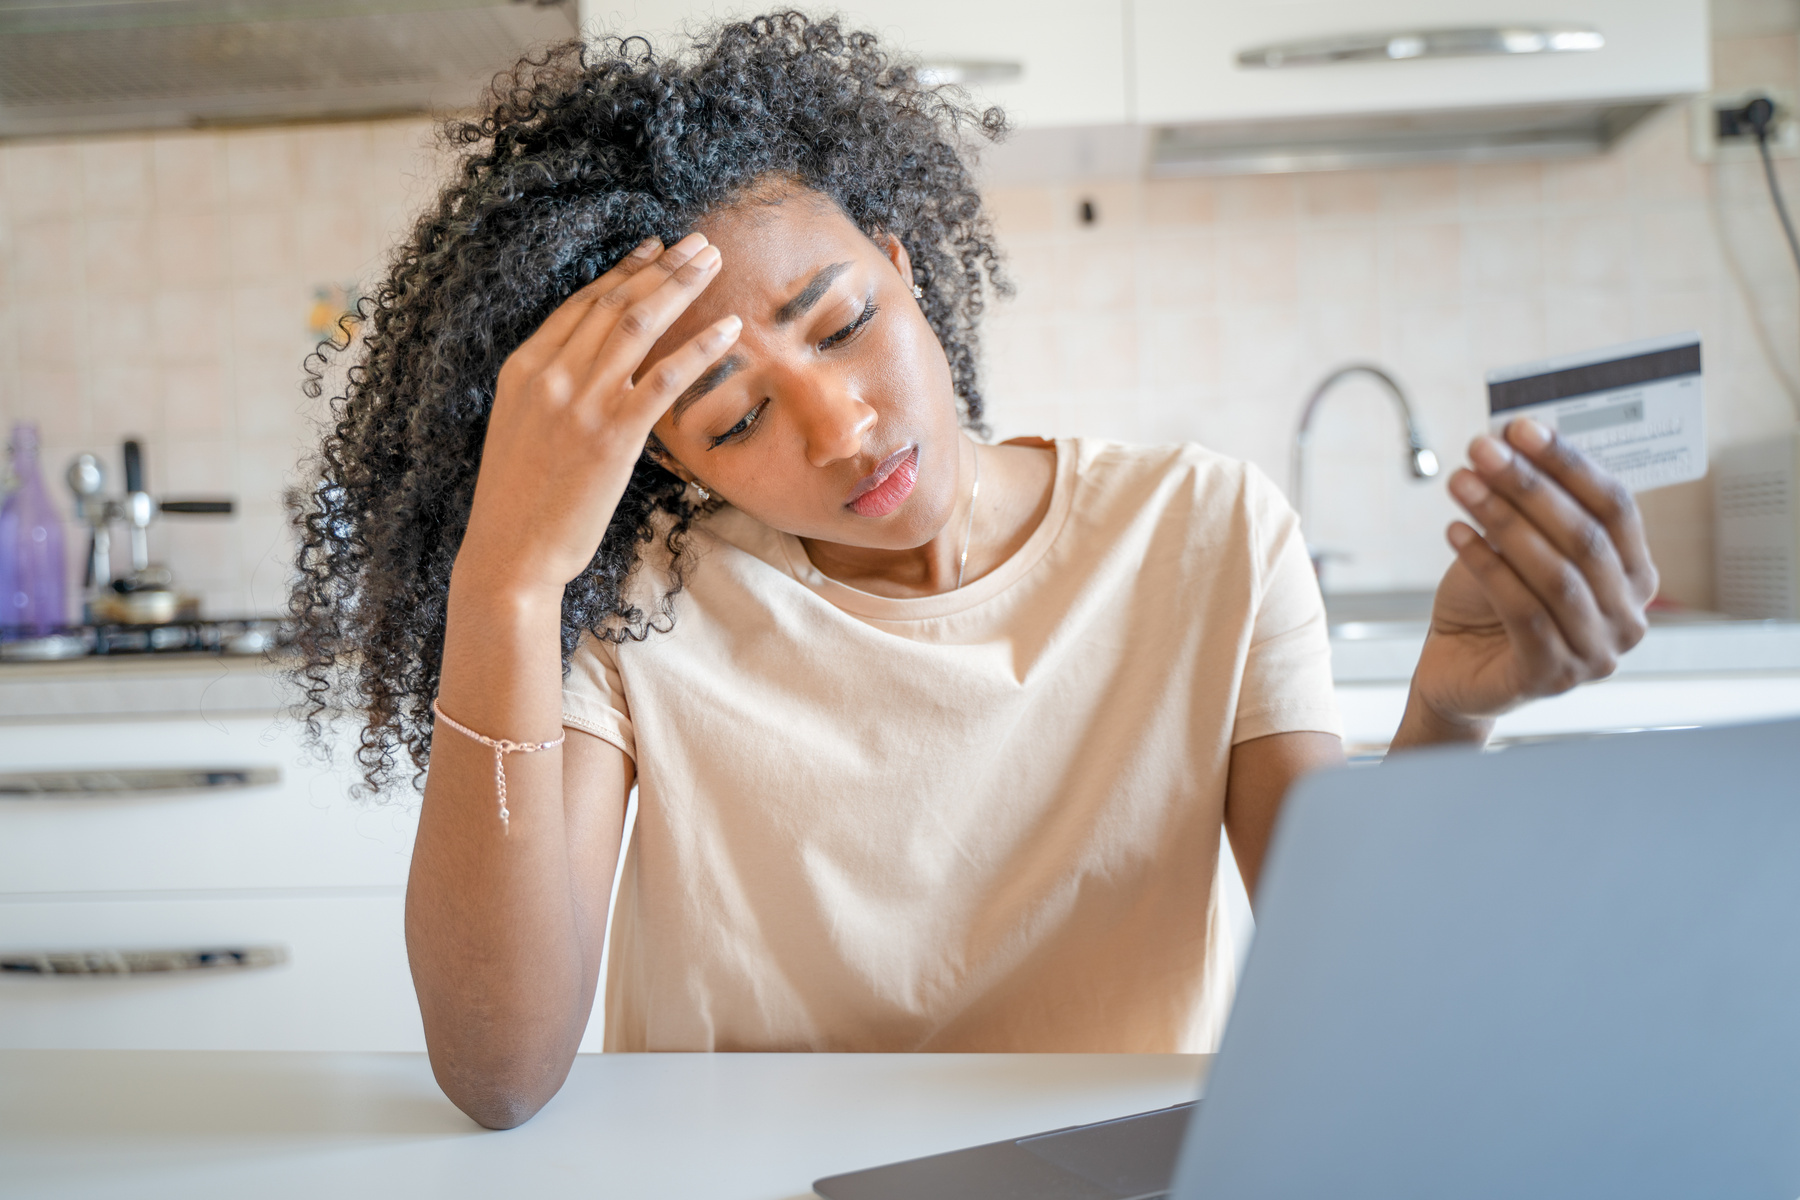 One sad black woman with credit card debt problem